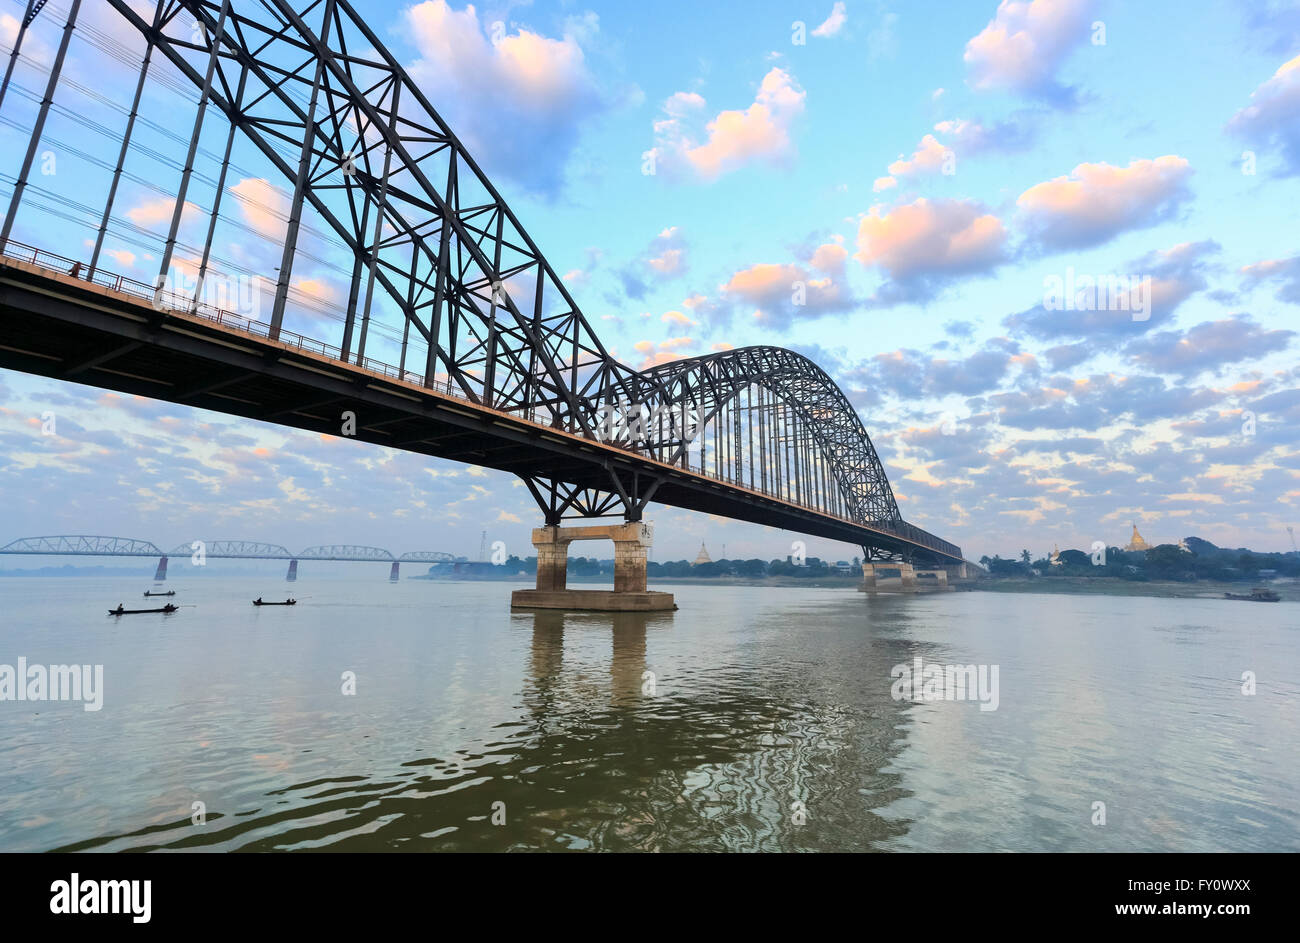 Irrawaddy (or Yadanabon) Bridge over the Irrawaddy River, Sagaing, near Mandalay, Myanmar (Burma) on a misty, foggy morning Stock Photo